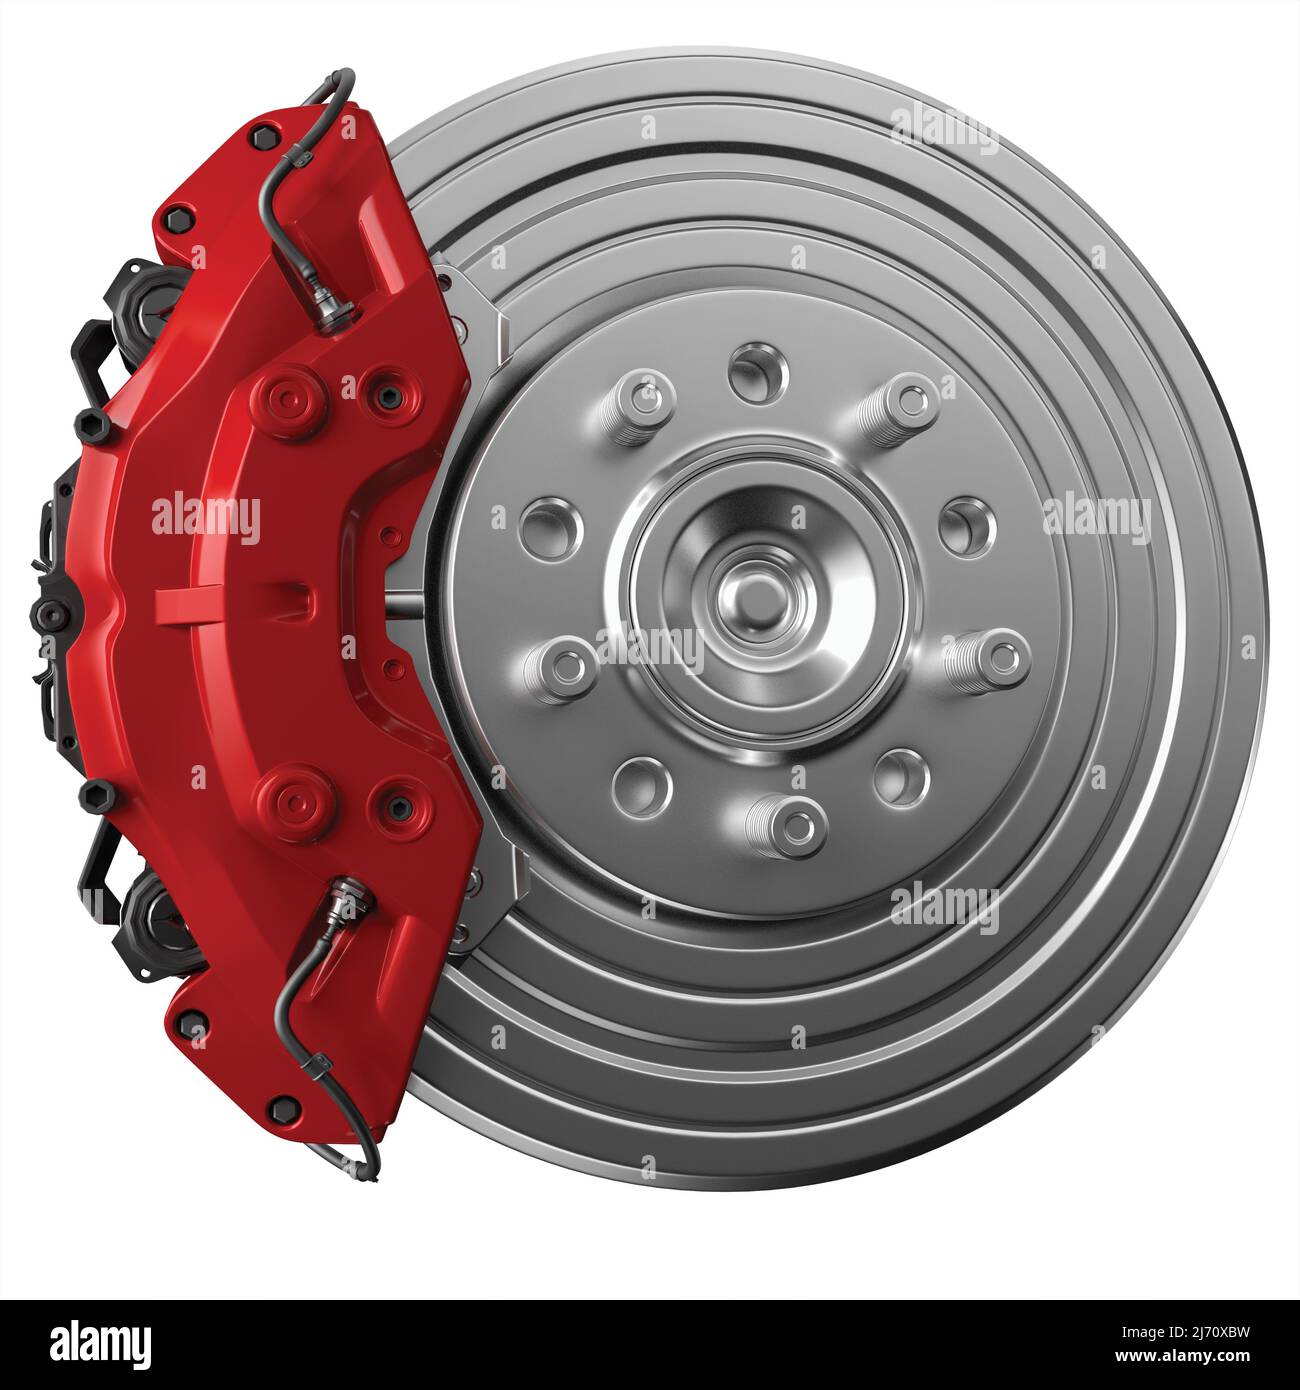 Braking system. Car brake disk with caliper isolated on white background. 3d illustration Stock Photo